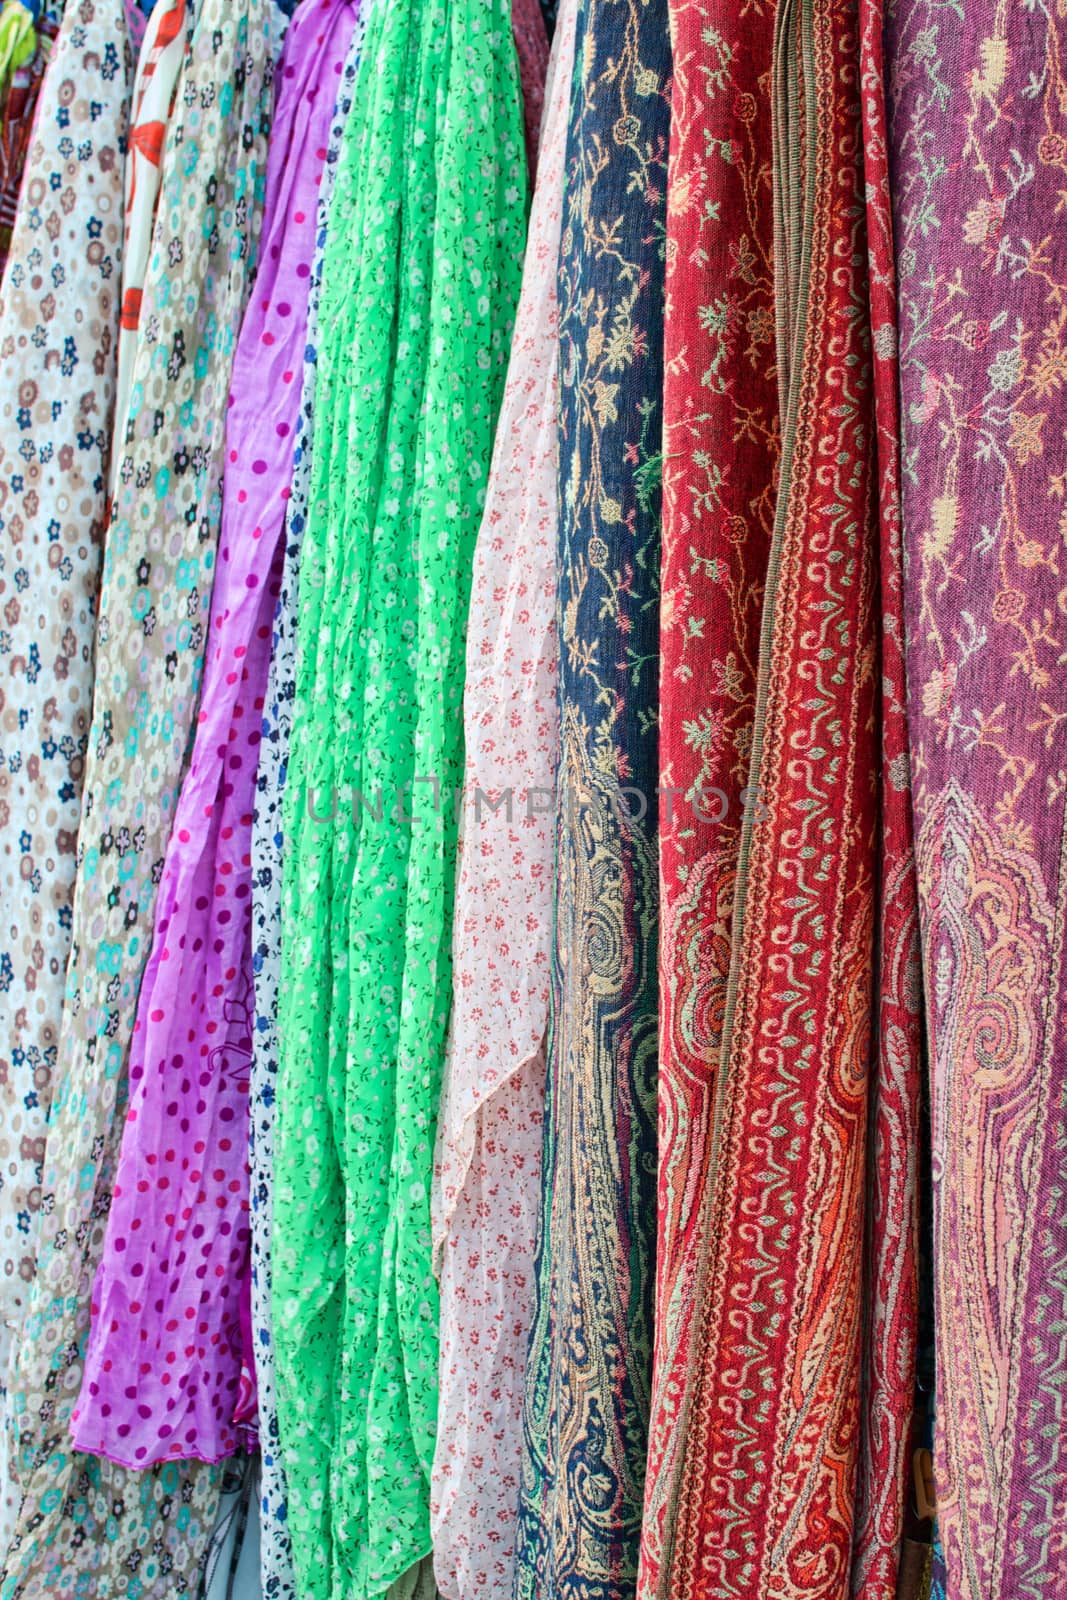 Silk scarfs for sale in a local market